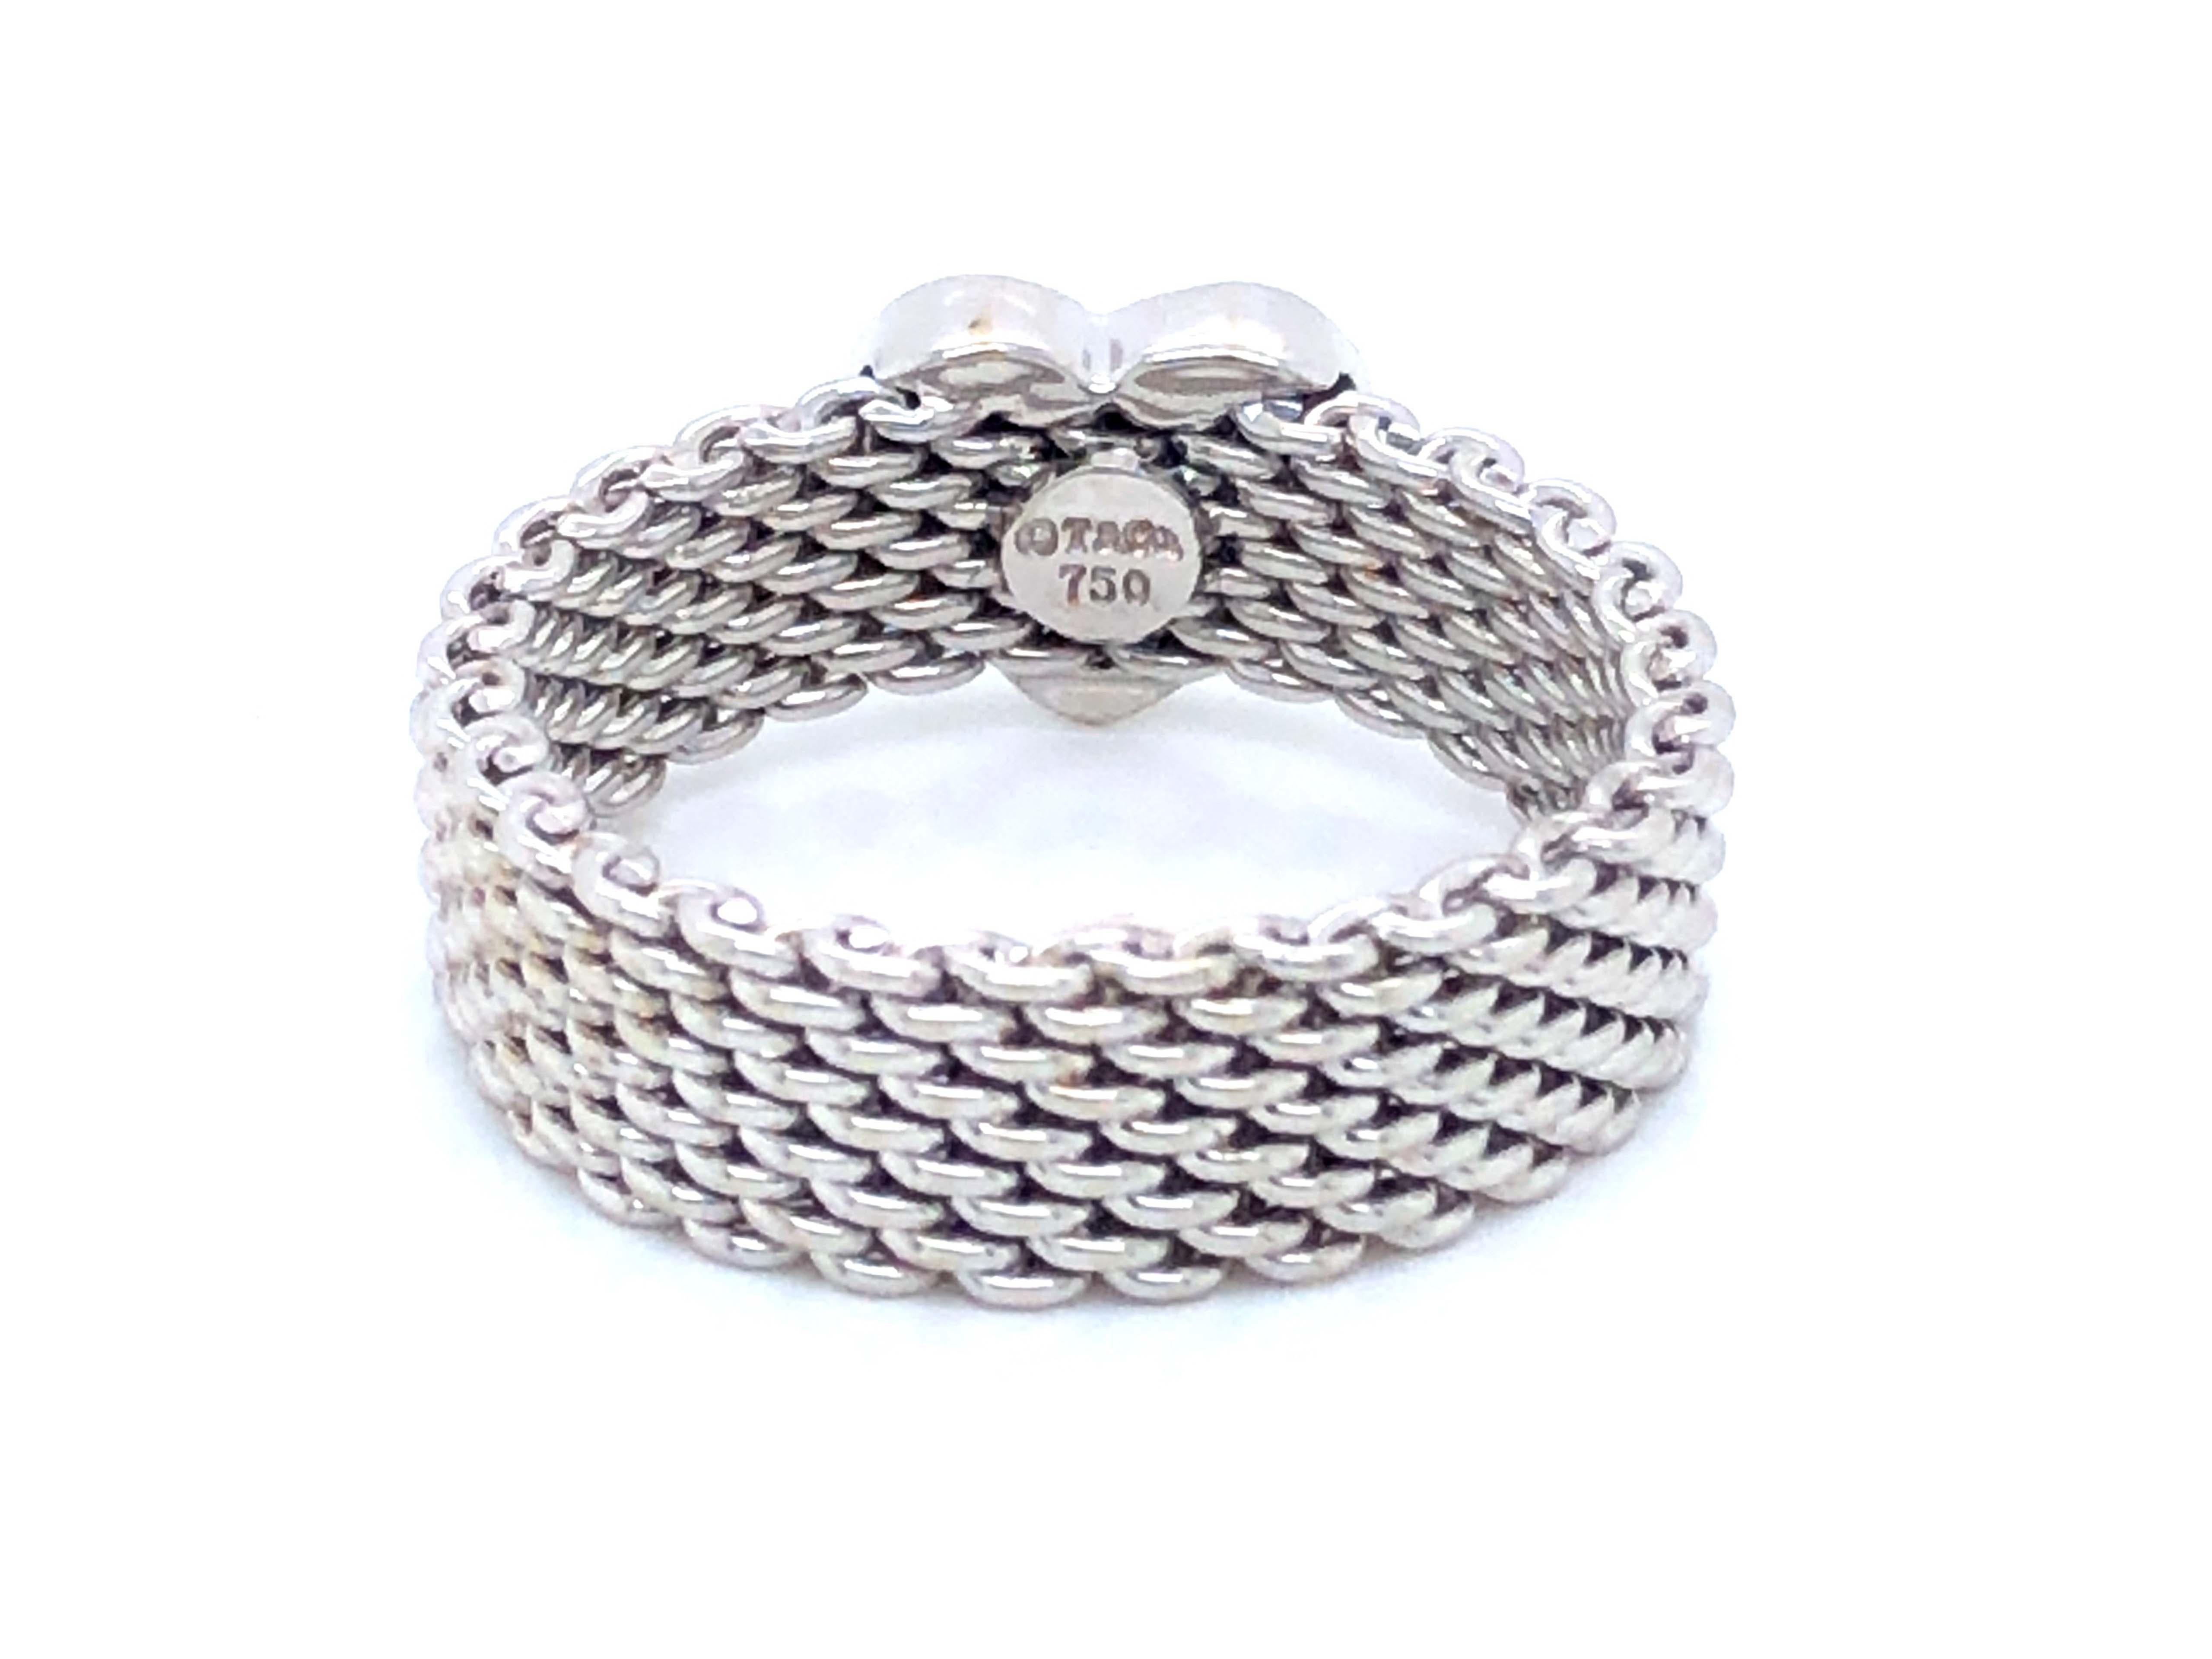 Tiffany & Co. Summerset Diamond Heart Ring in 18k White Gold 2